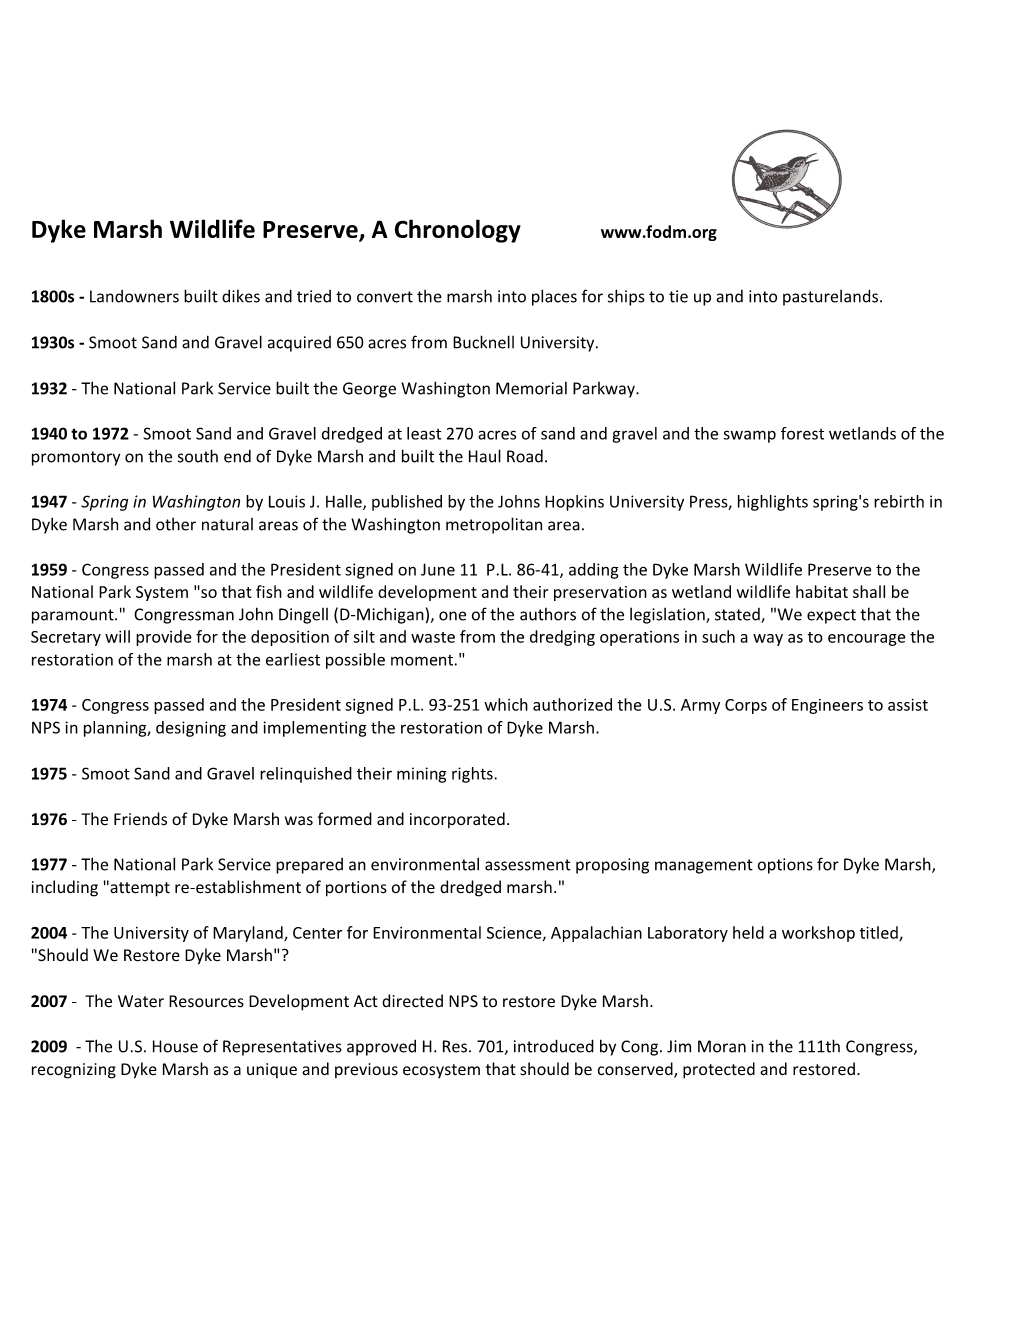 Dyke Marsh Wildlife Preserve, a Chronology